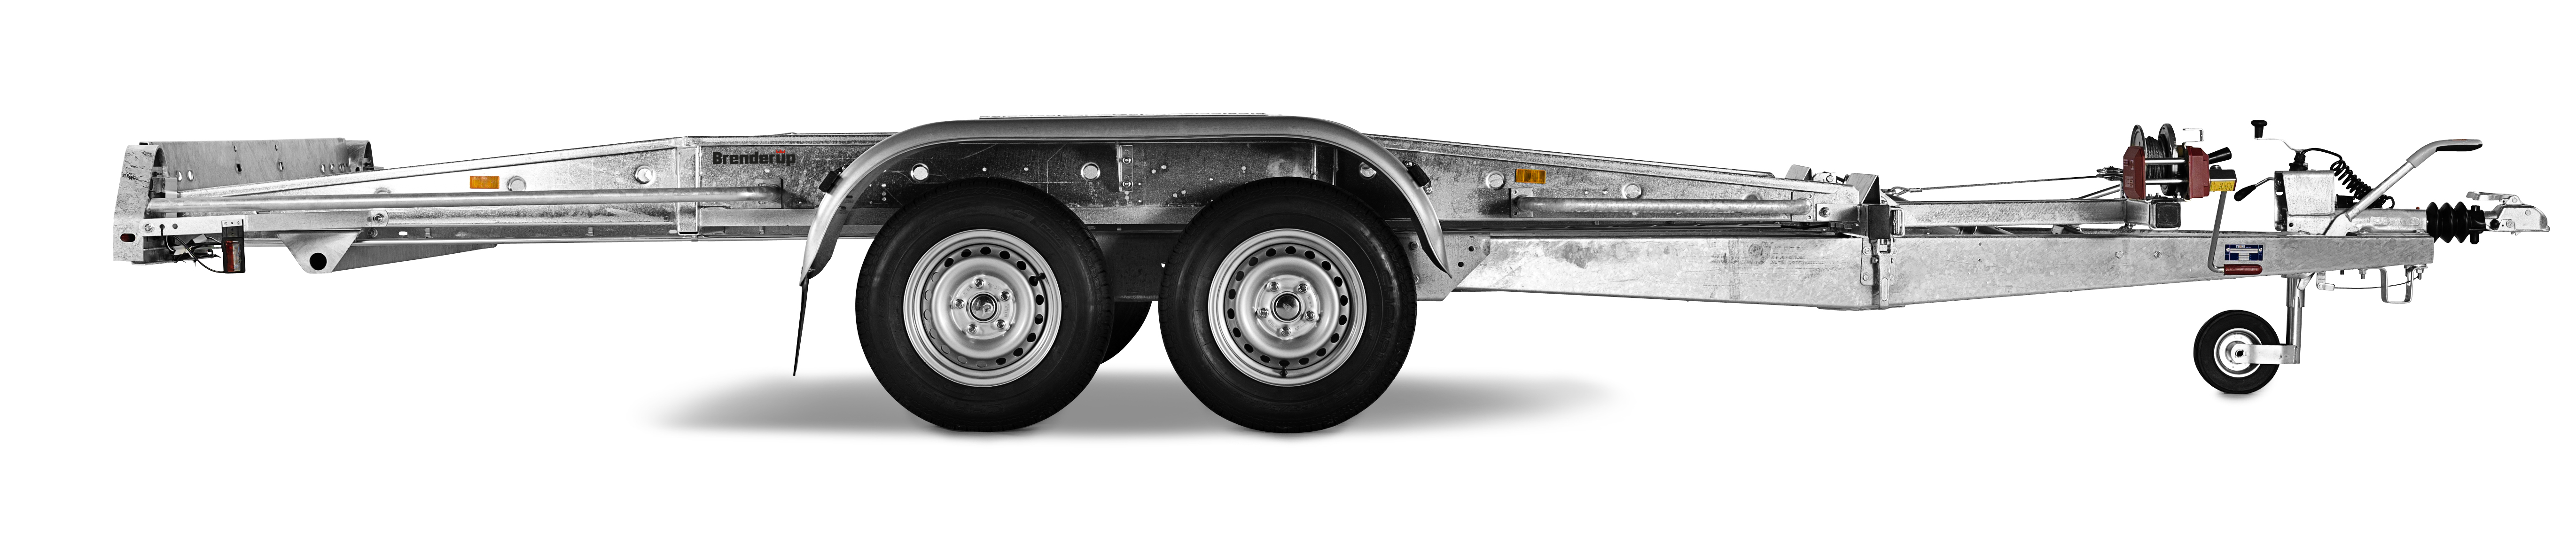 Autotransporter Anhänger Autotrailer Sprint Master Alu 203x460cm 2